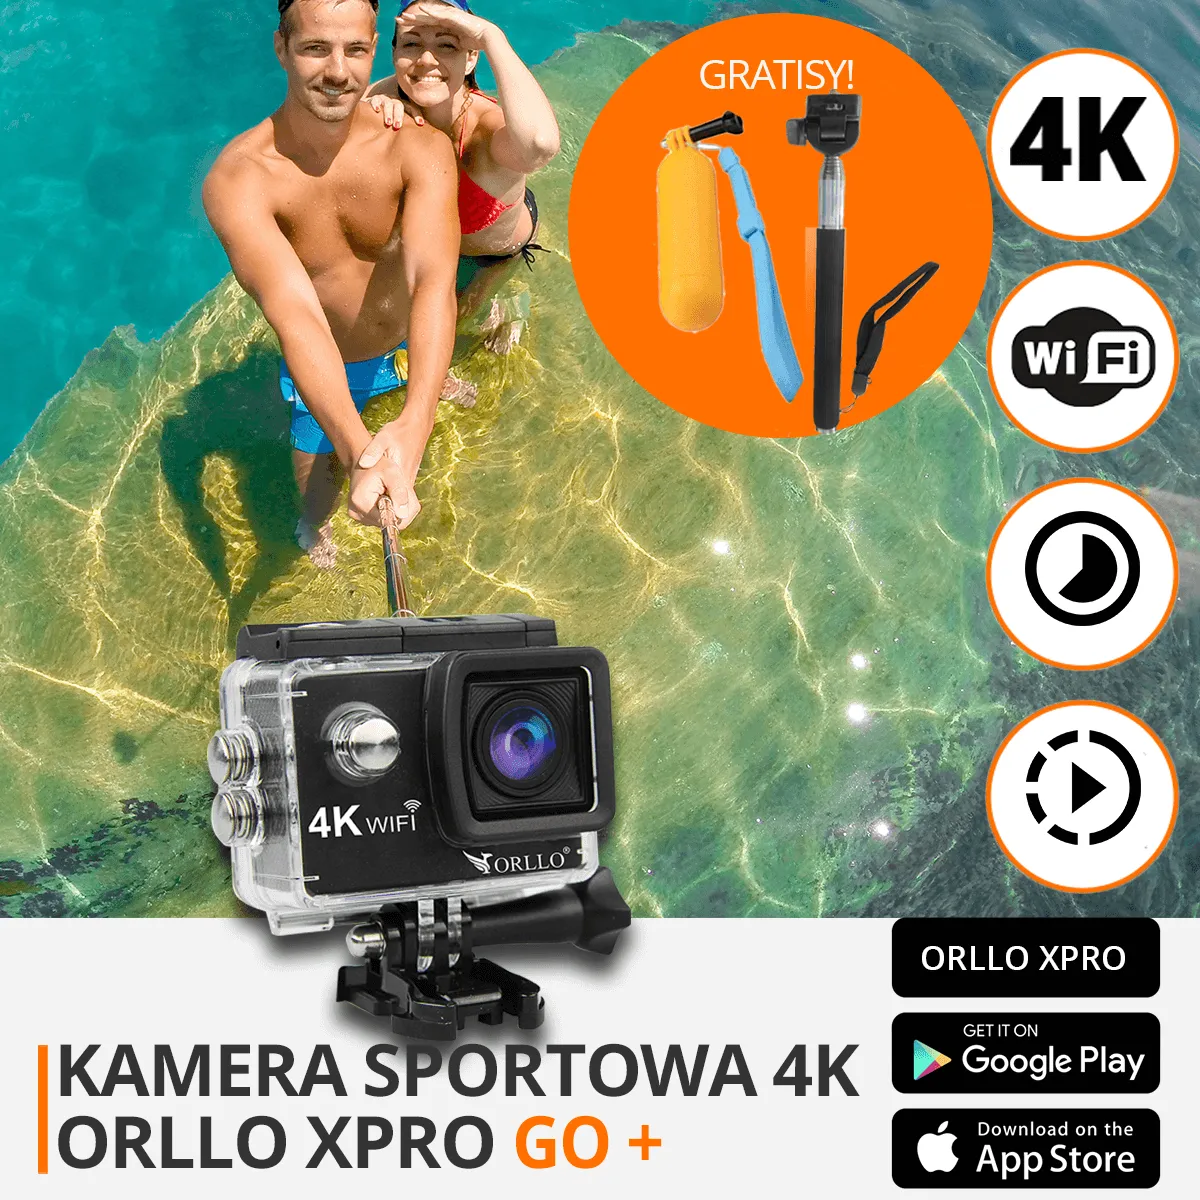 kamerka-sportowa-XPRO-GO-orllo-pl